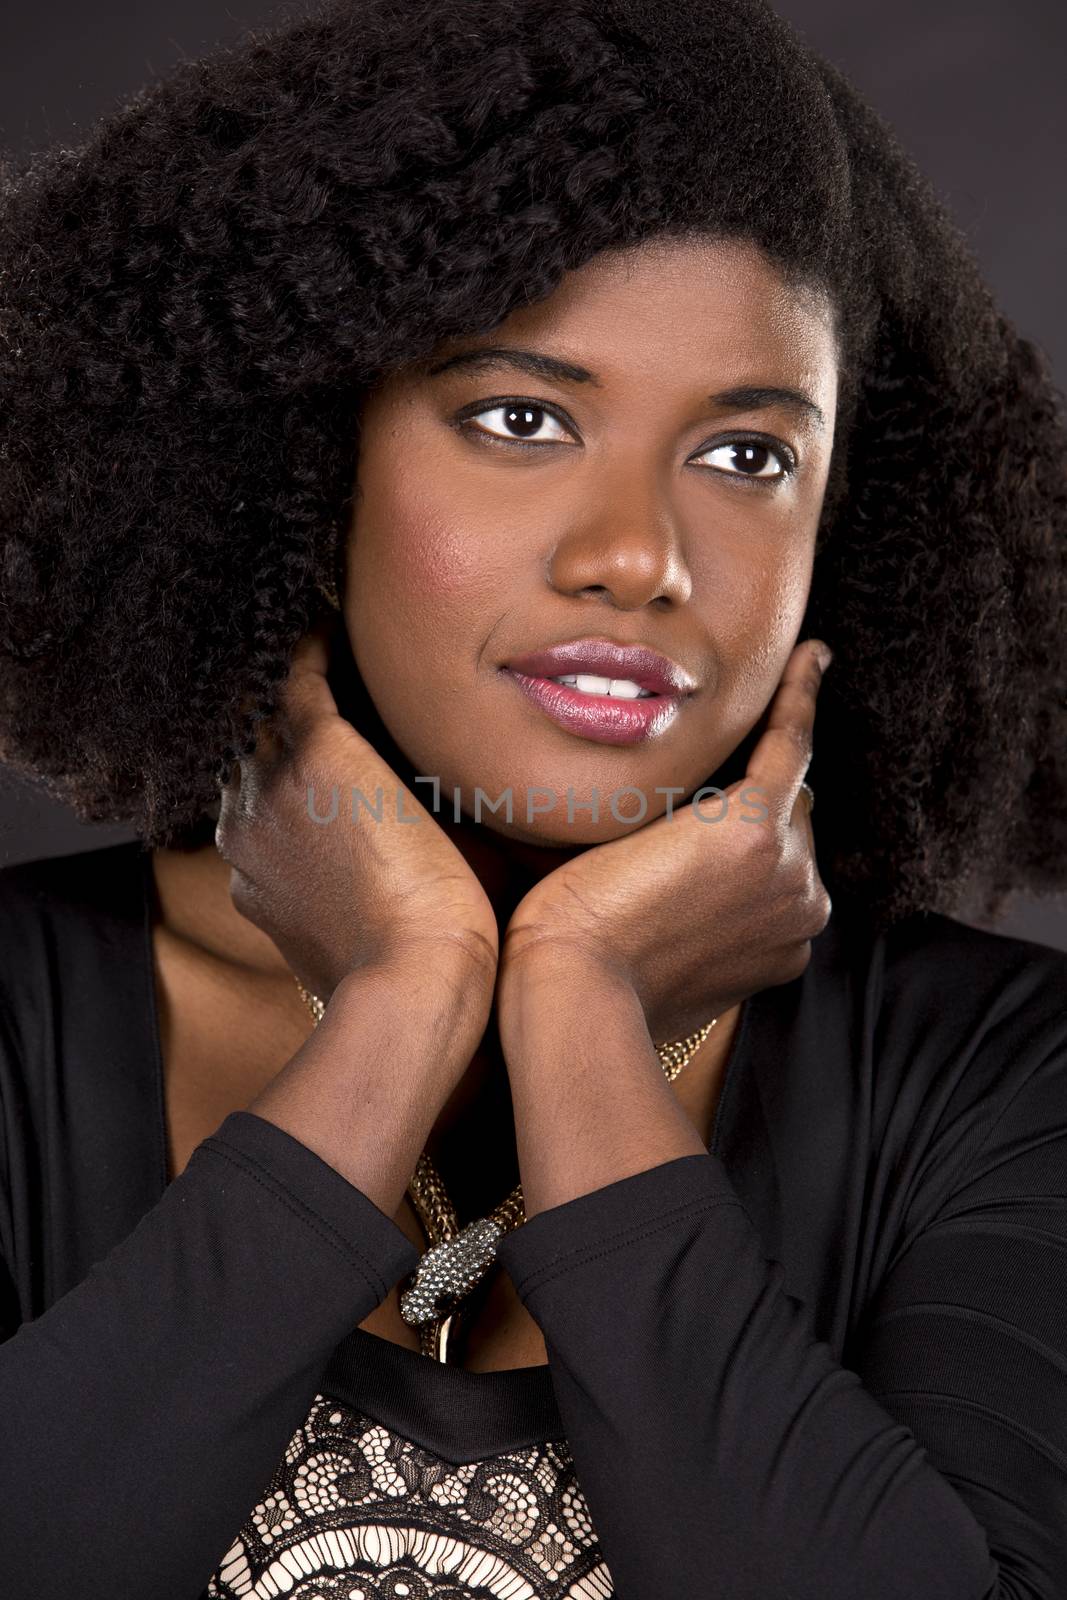 black upscale woman by zdenkadarula